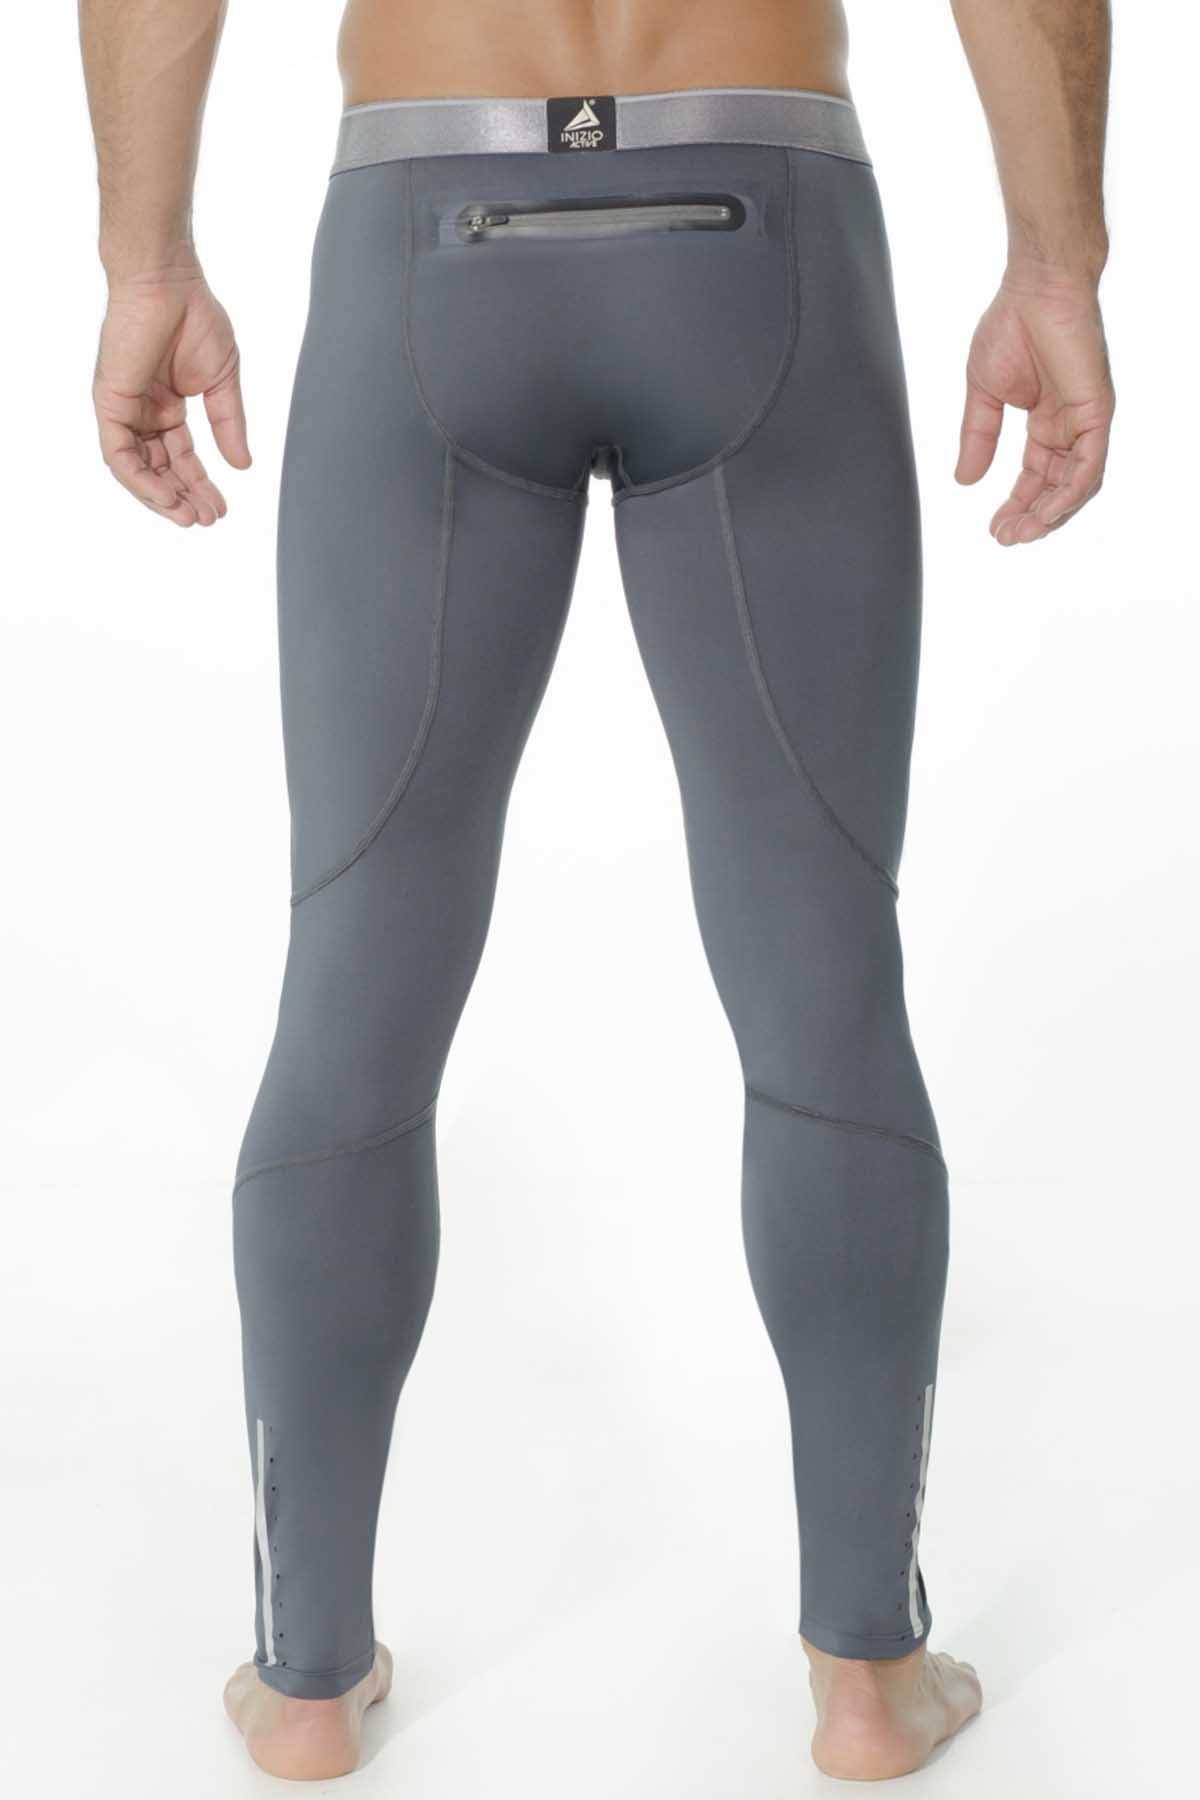 INIZIO Grey Nide Microfiber Athletic Pant